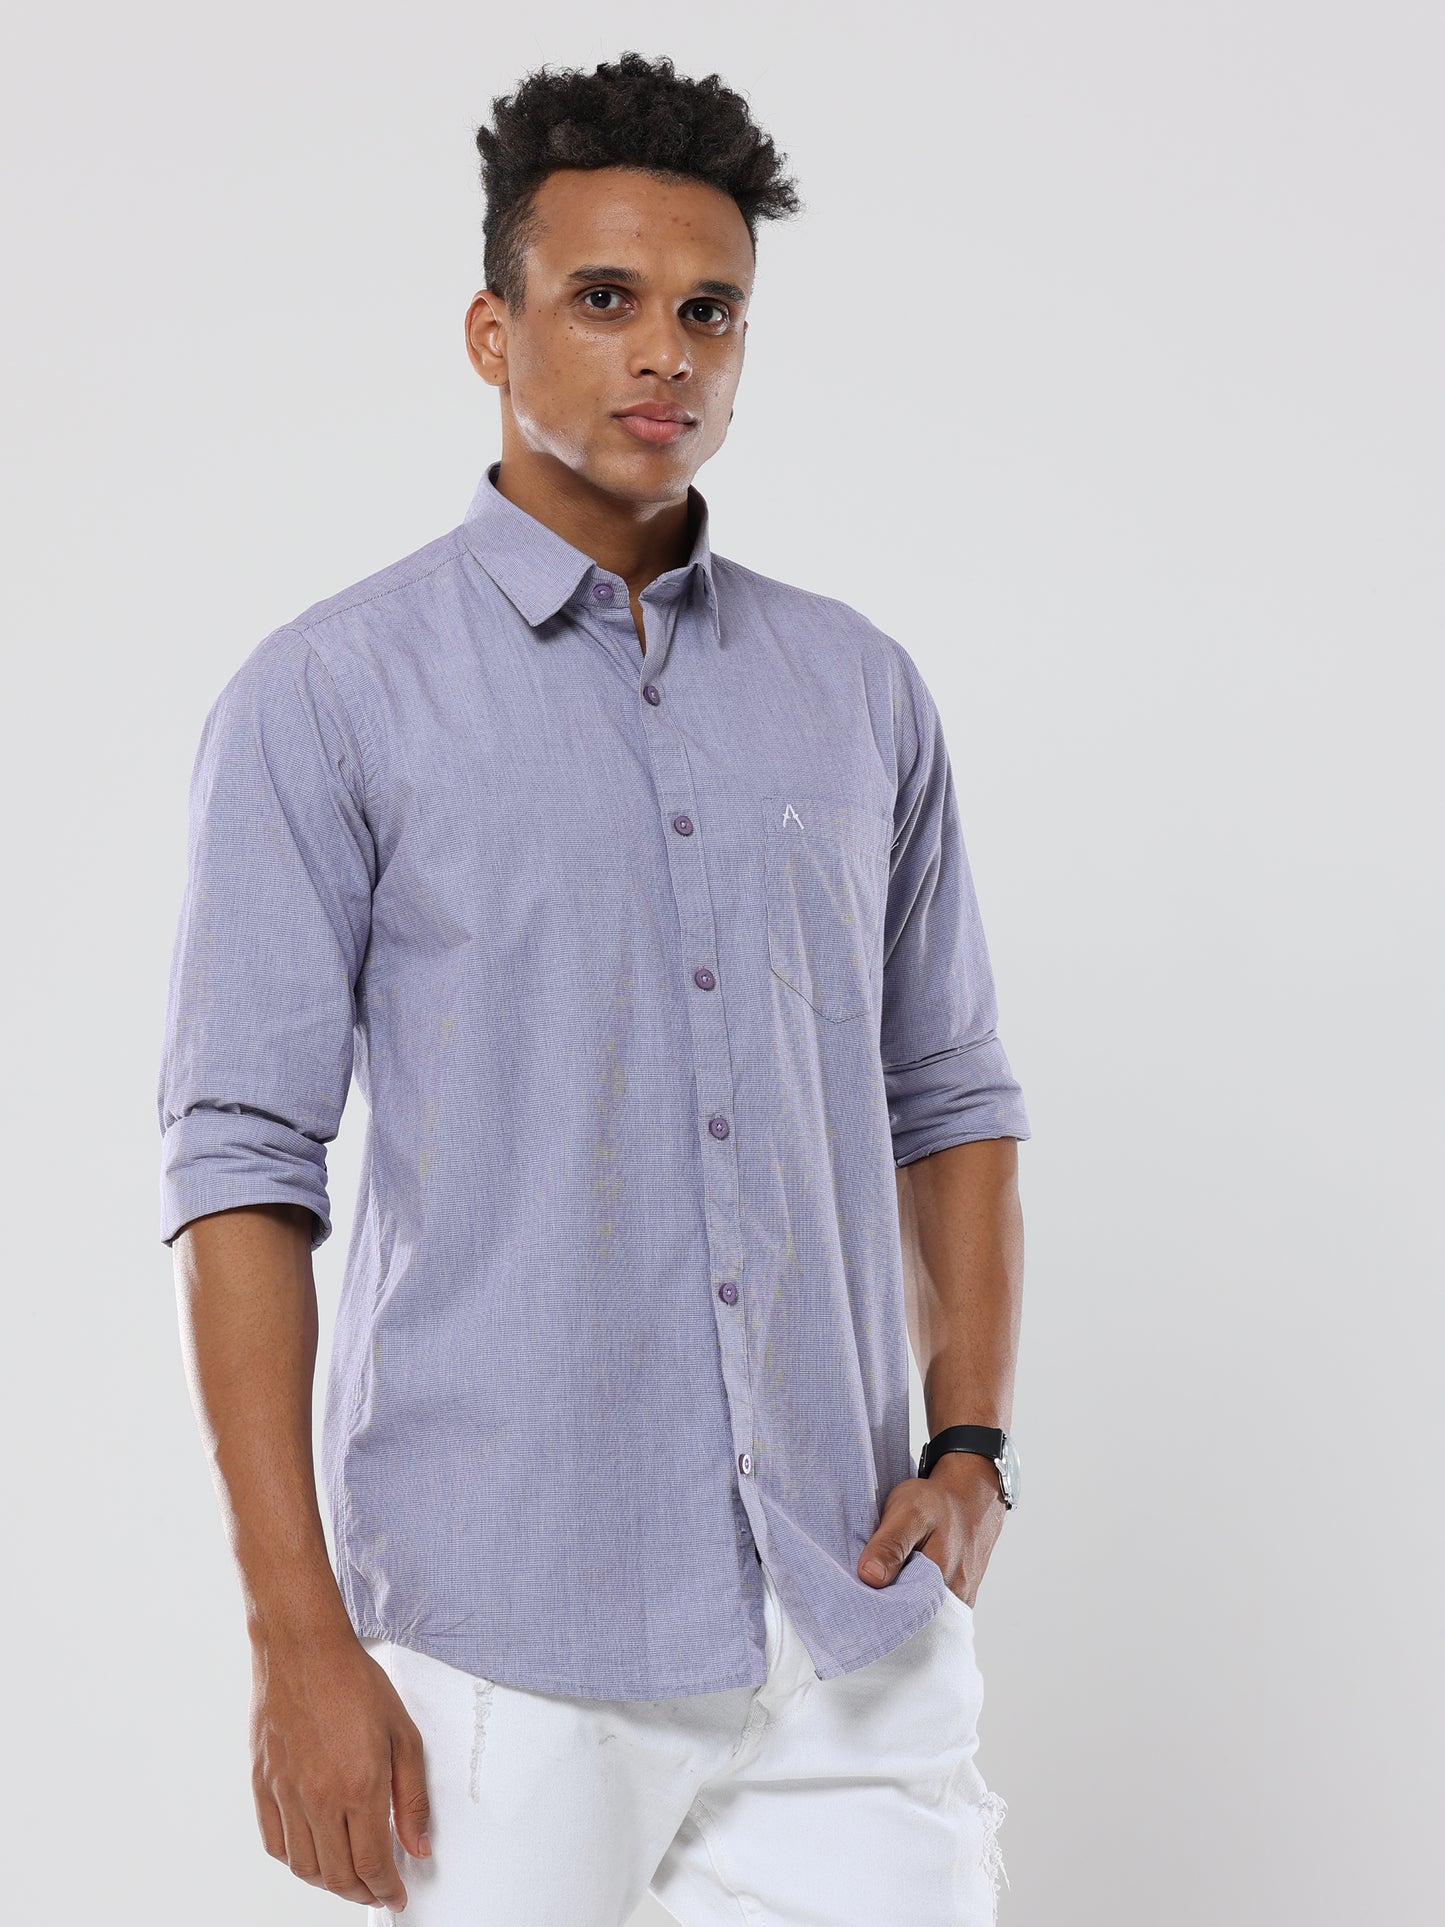 Light Purple pin checks  shirt with pocket for men